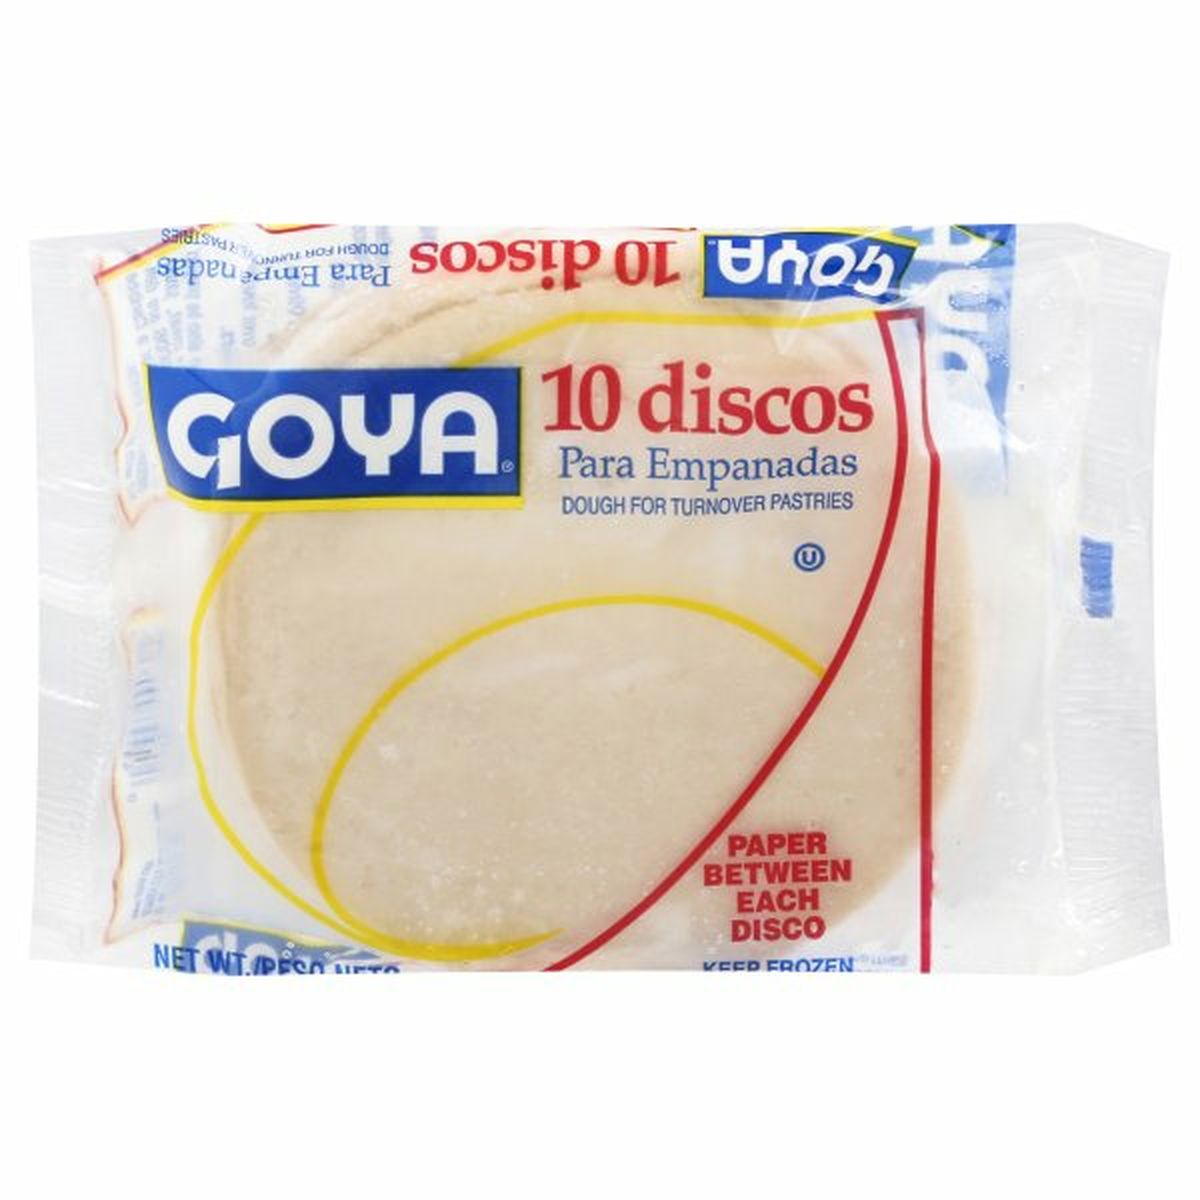 Calories in Goya Discos, Empanadas